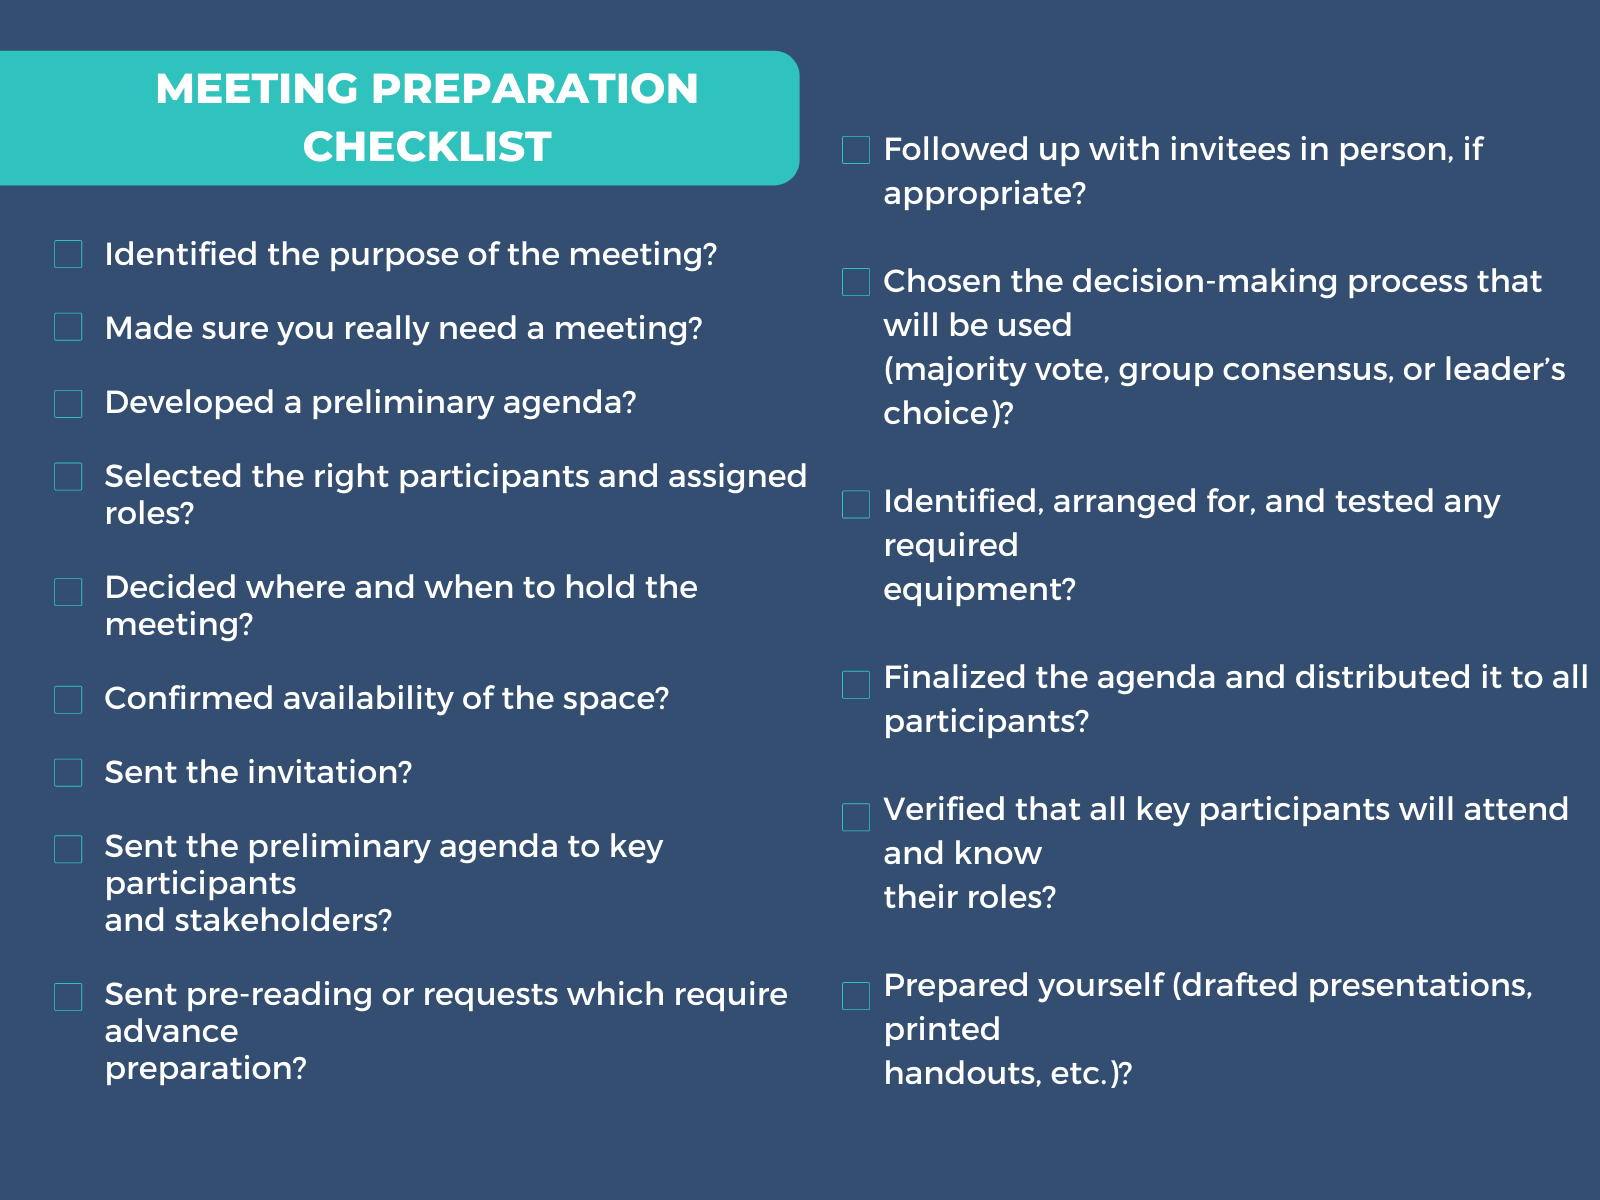 Meeting preparation checklist